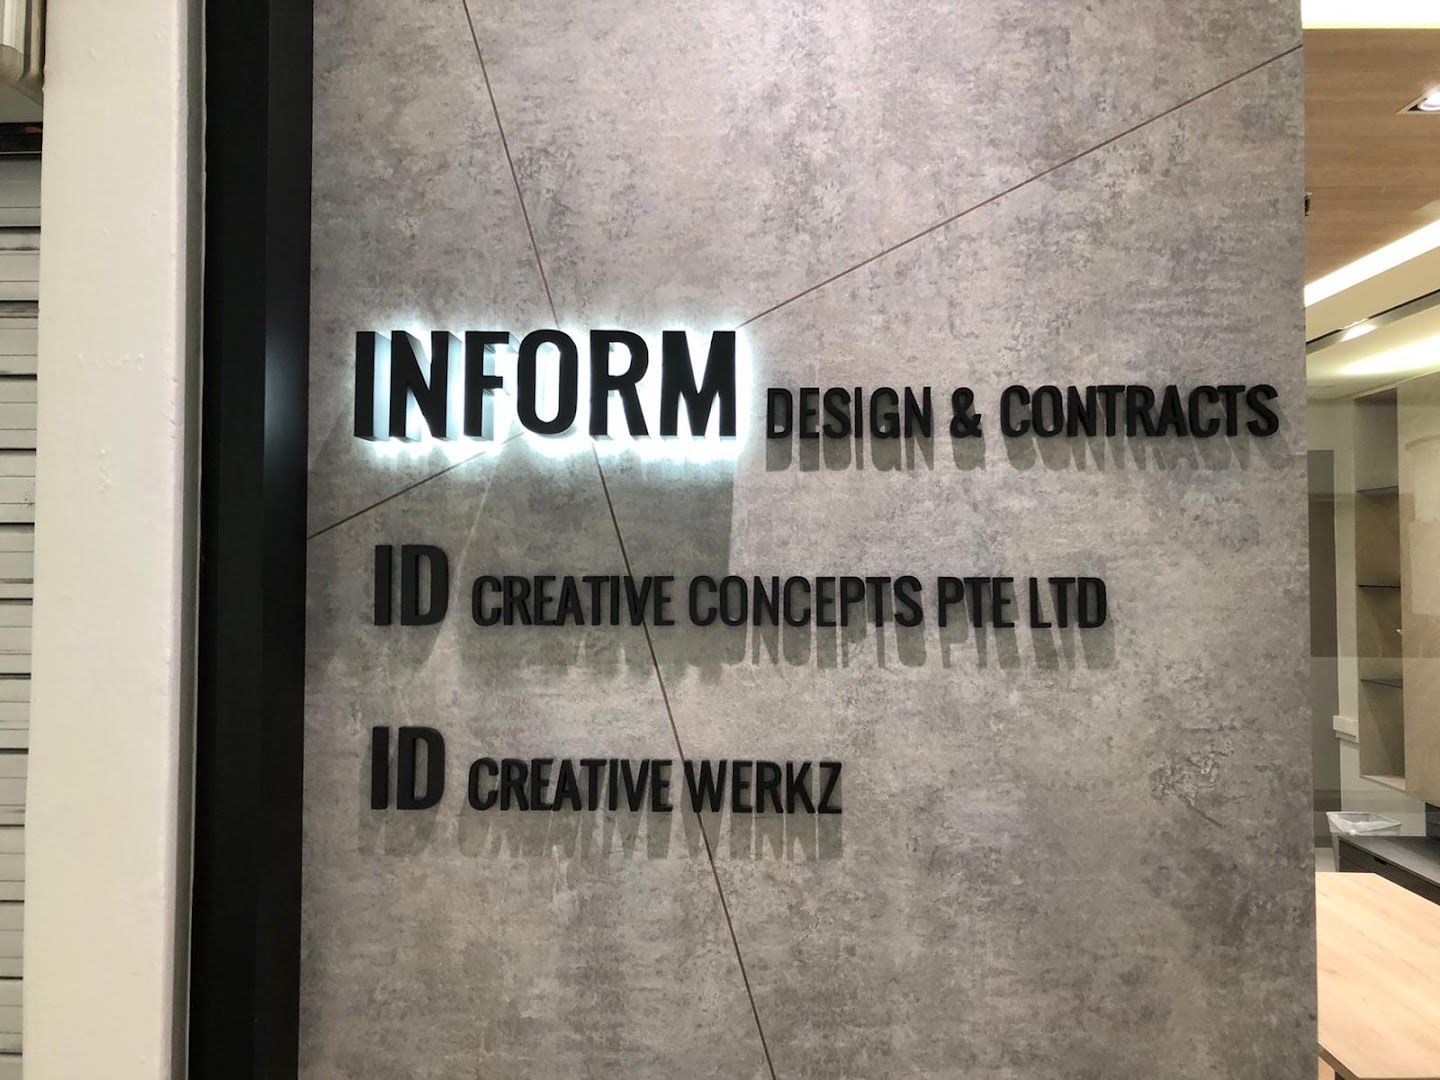 Inform Design & Contracts